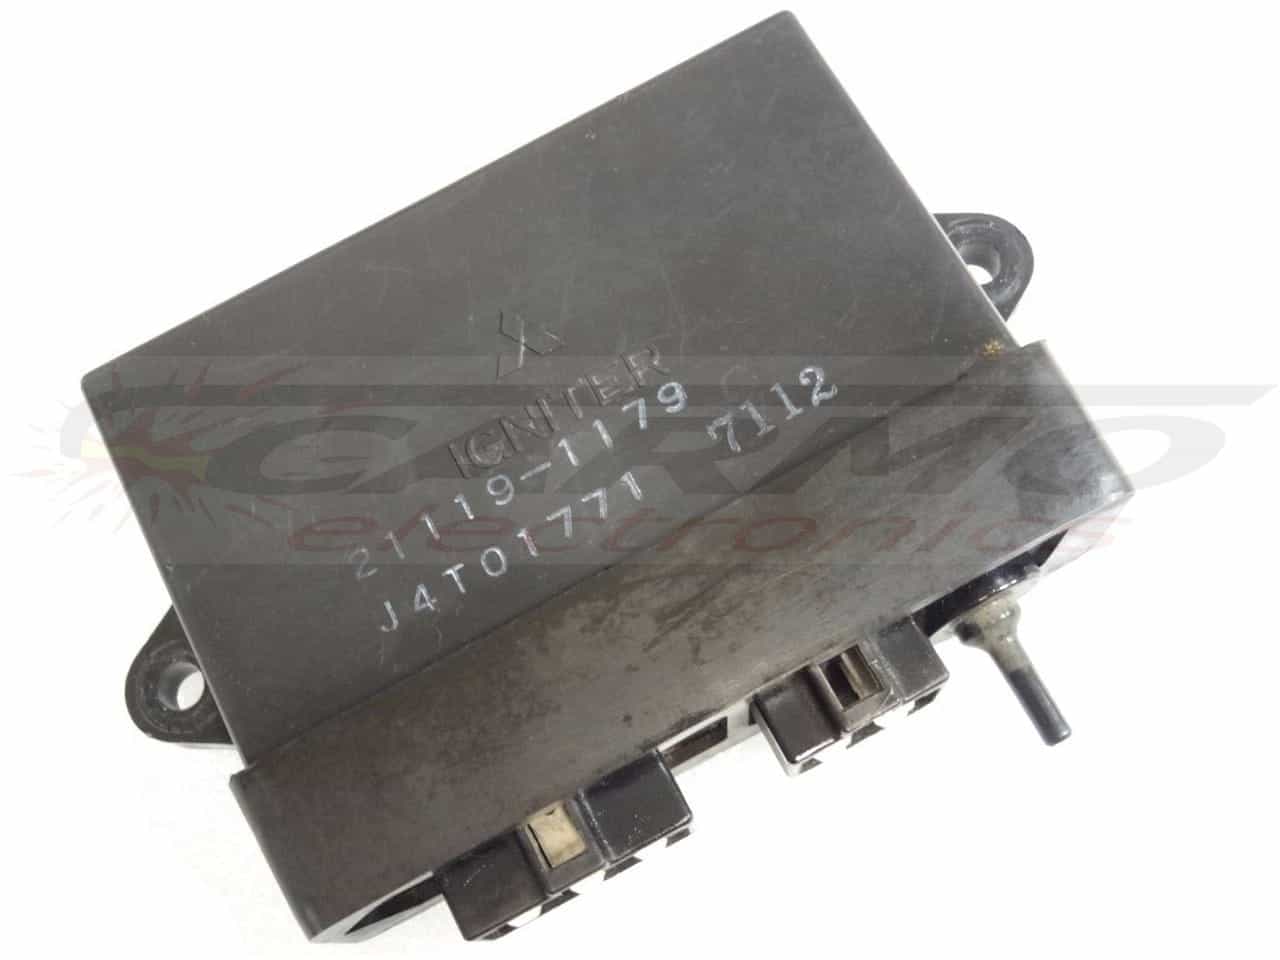 ZG1200 VOYAGER (21119-1179, J4T01771) CDI ECU ignitor ignition unit